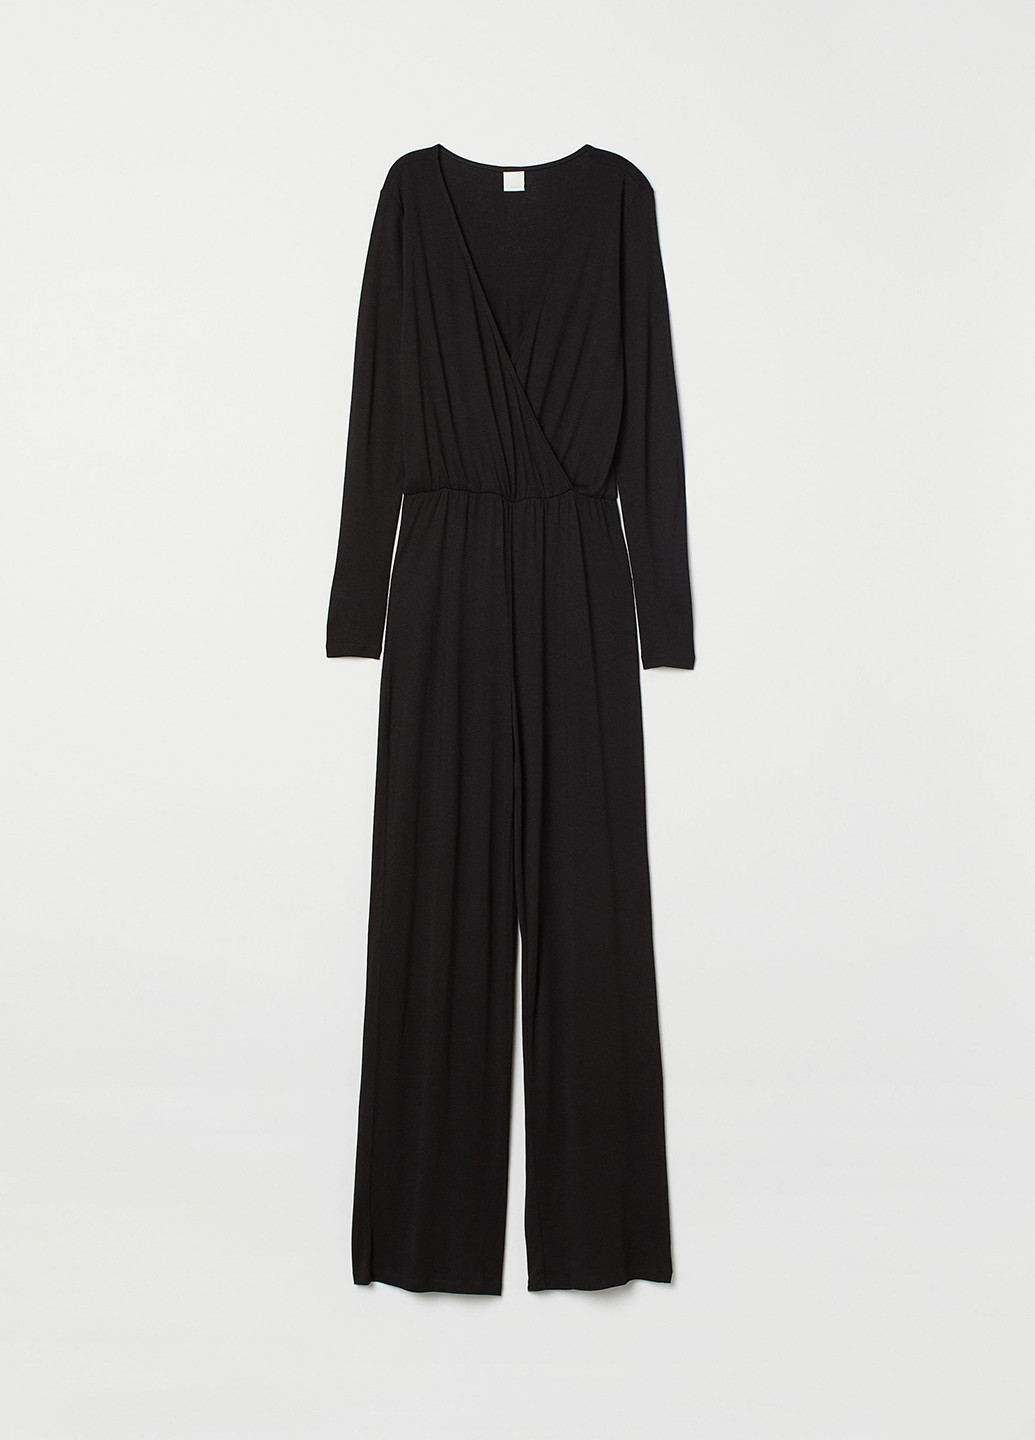 Комбинезон H&M комбинезон-брюки однотонный чёрный кэжуал вискоза, трикотаж